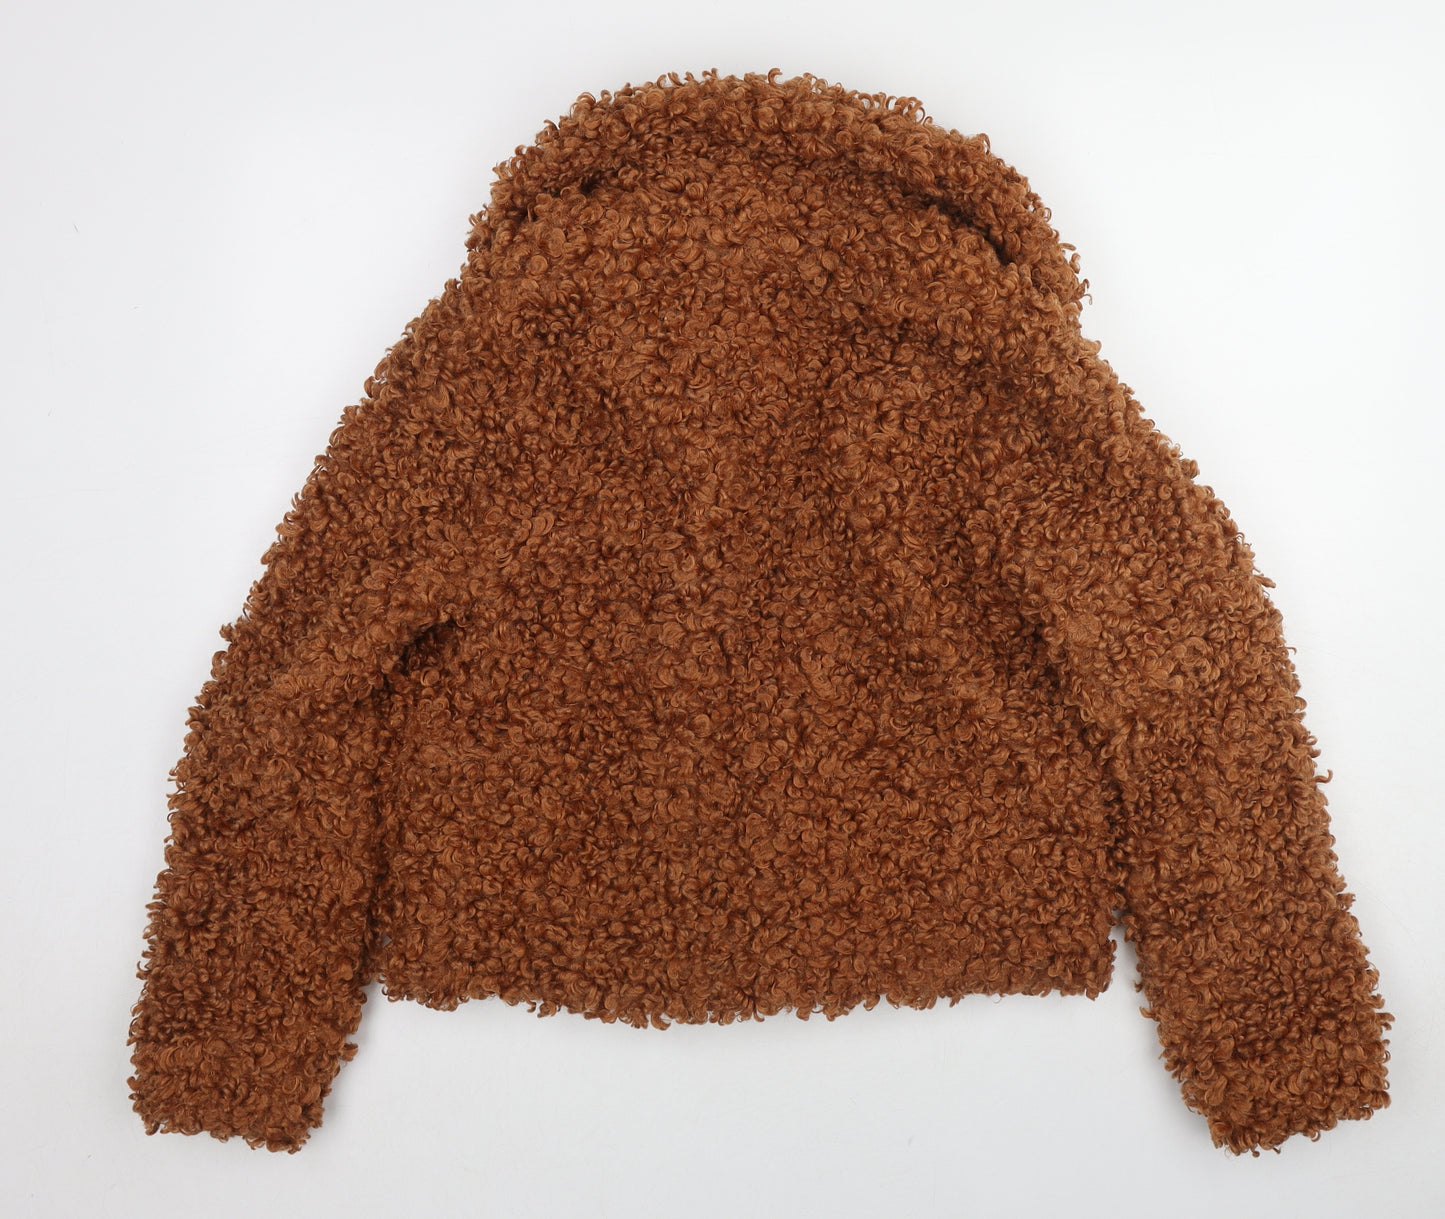 River Island Womens Brown Jacket Size M - Teddy Bear Style